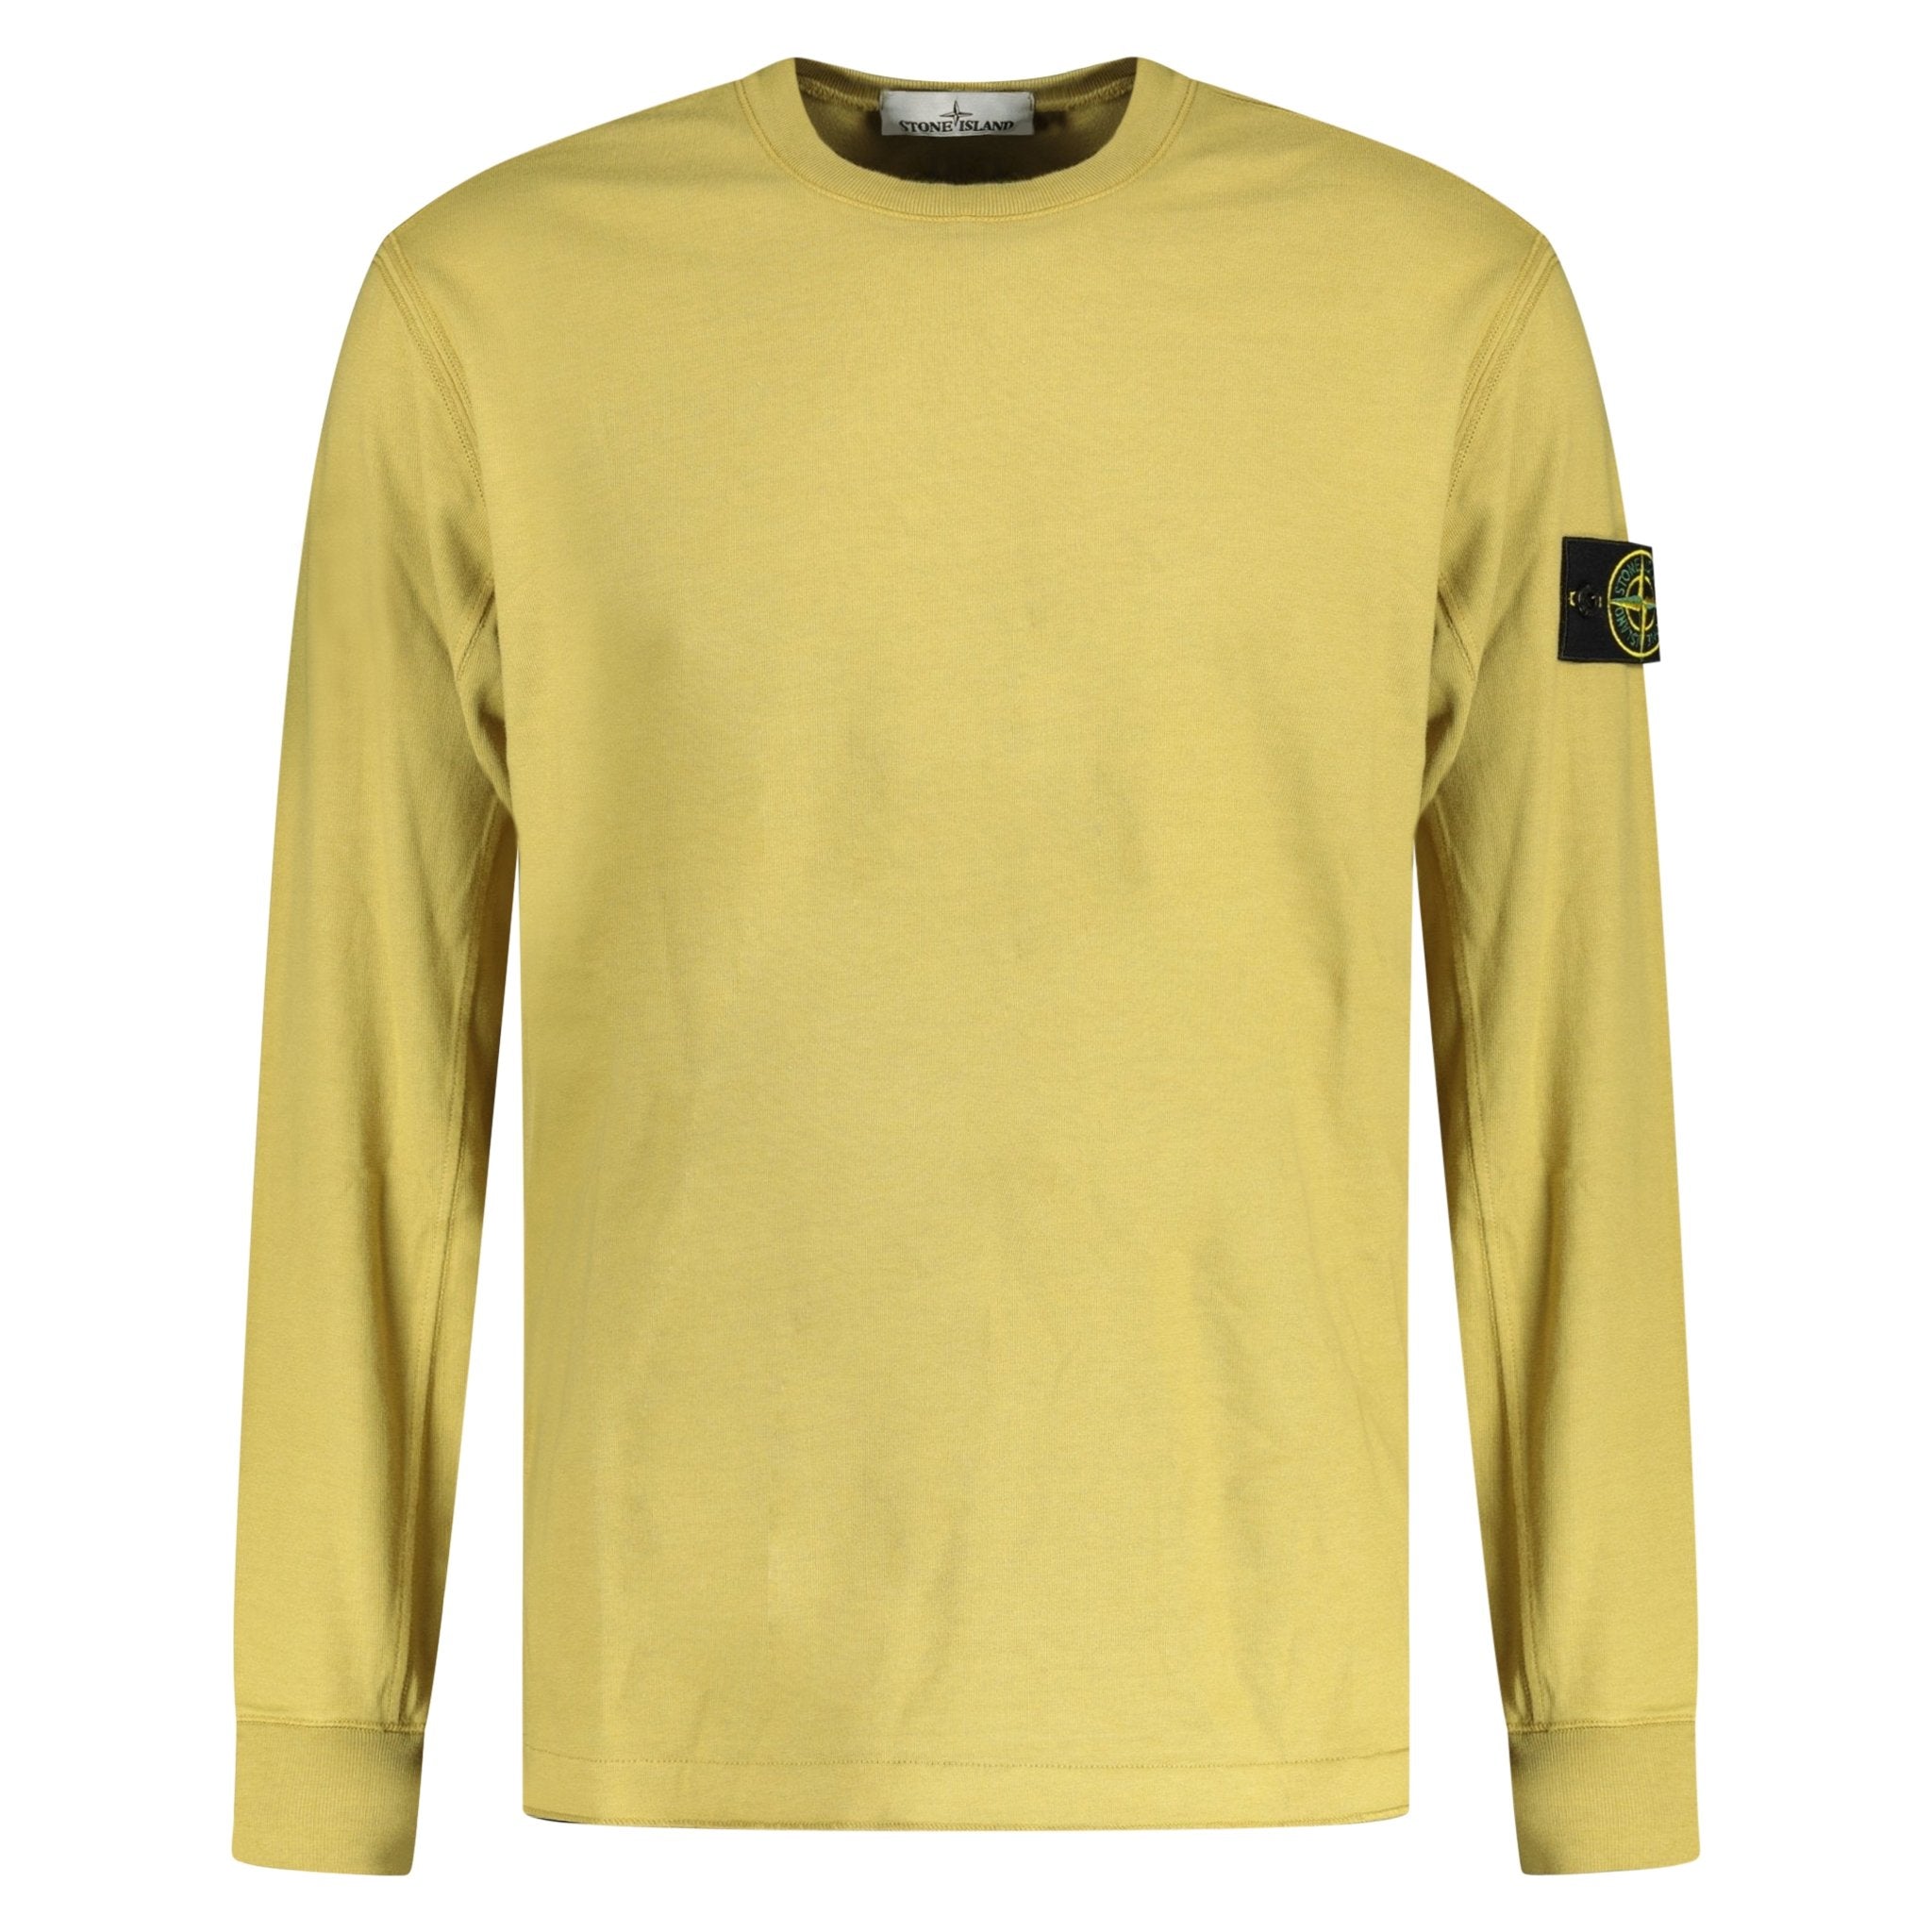 Stone Island Cotton Sweatshirt Ochre Yellow